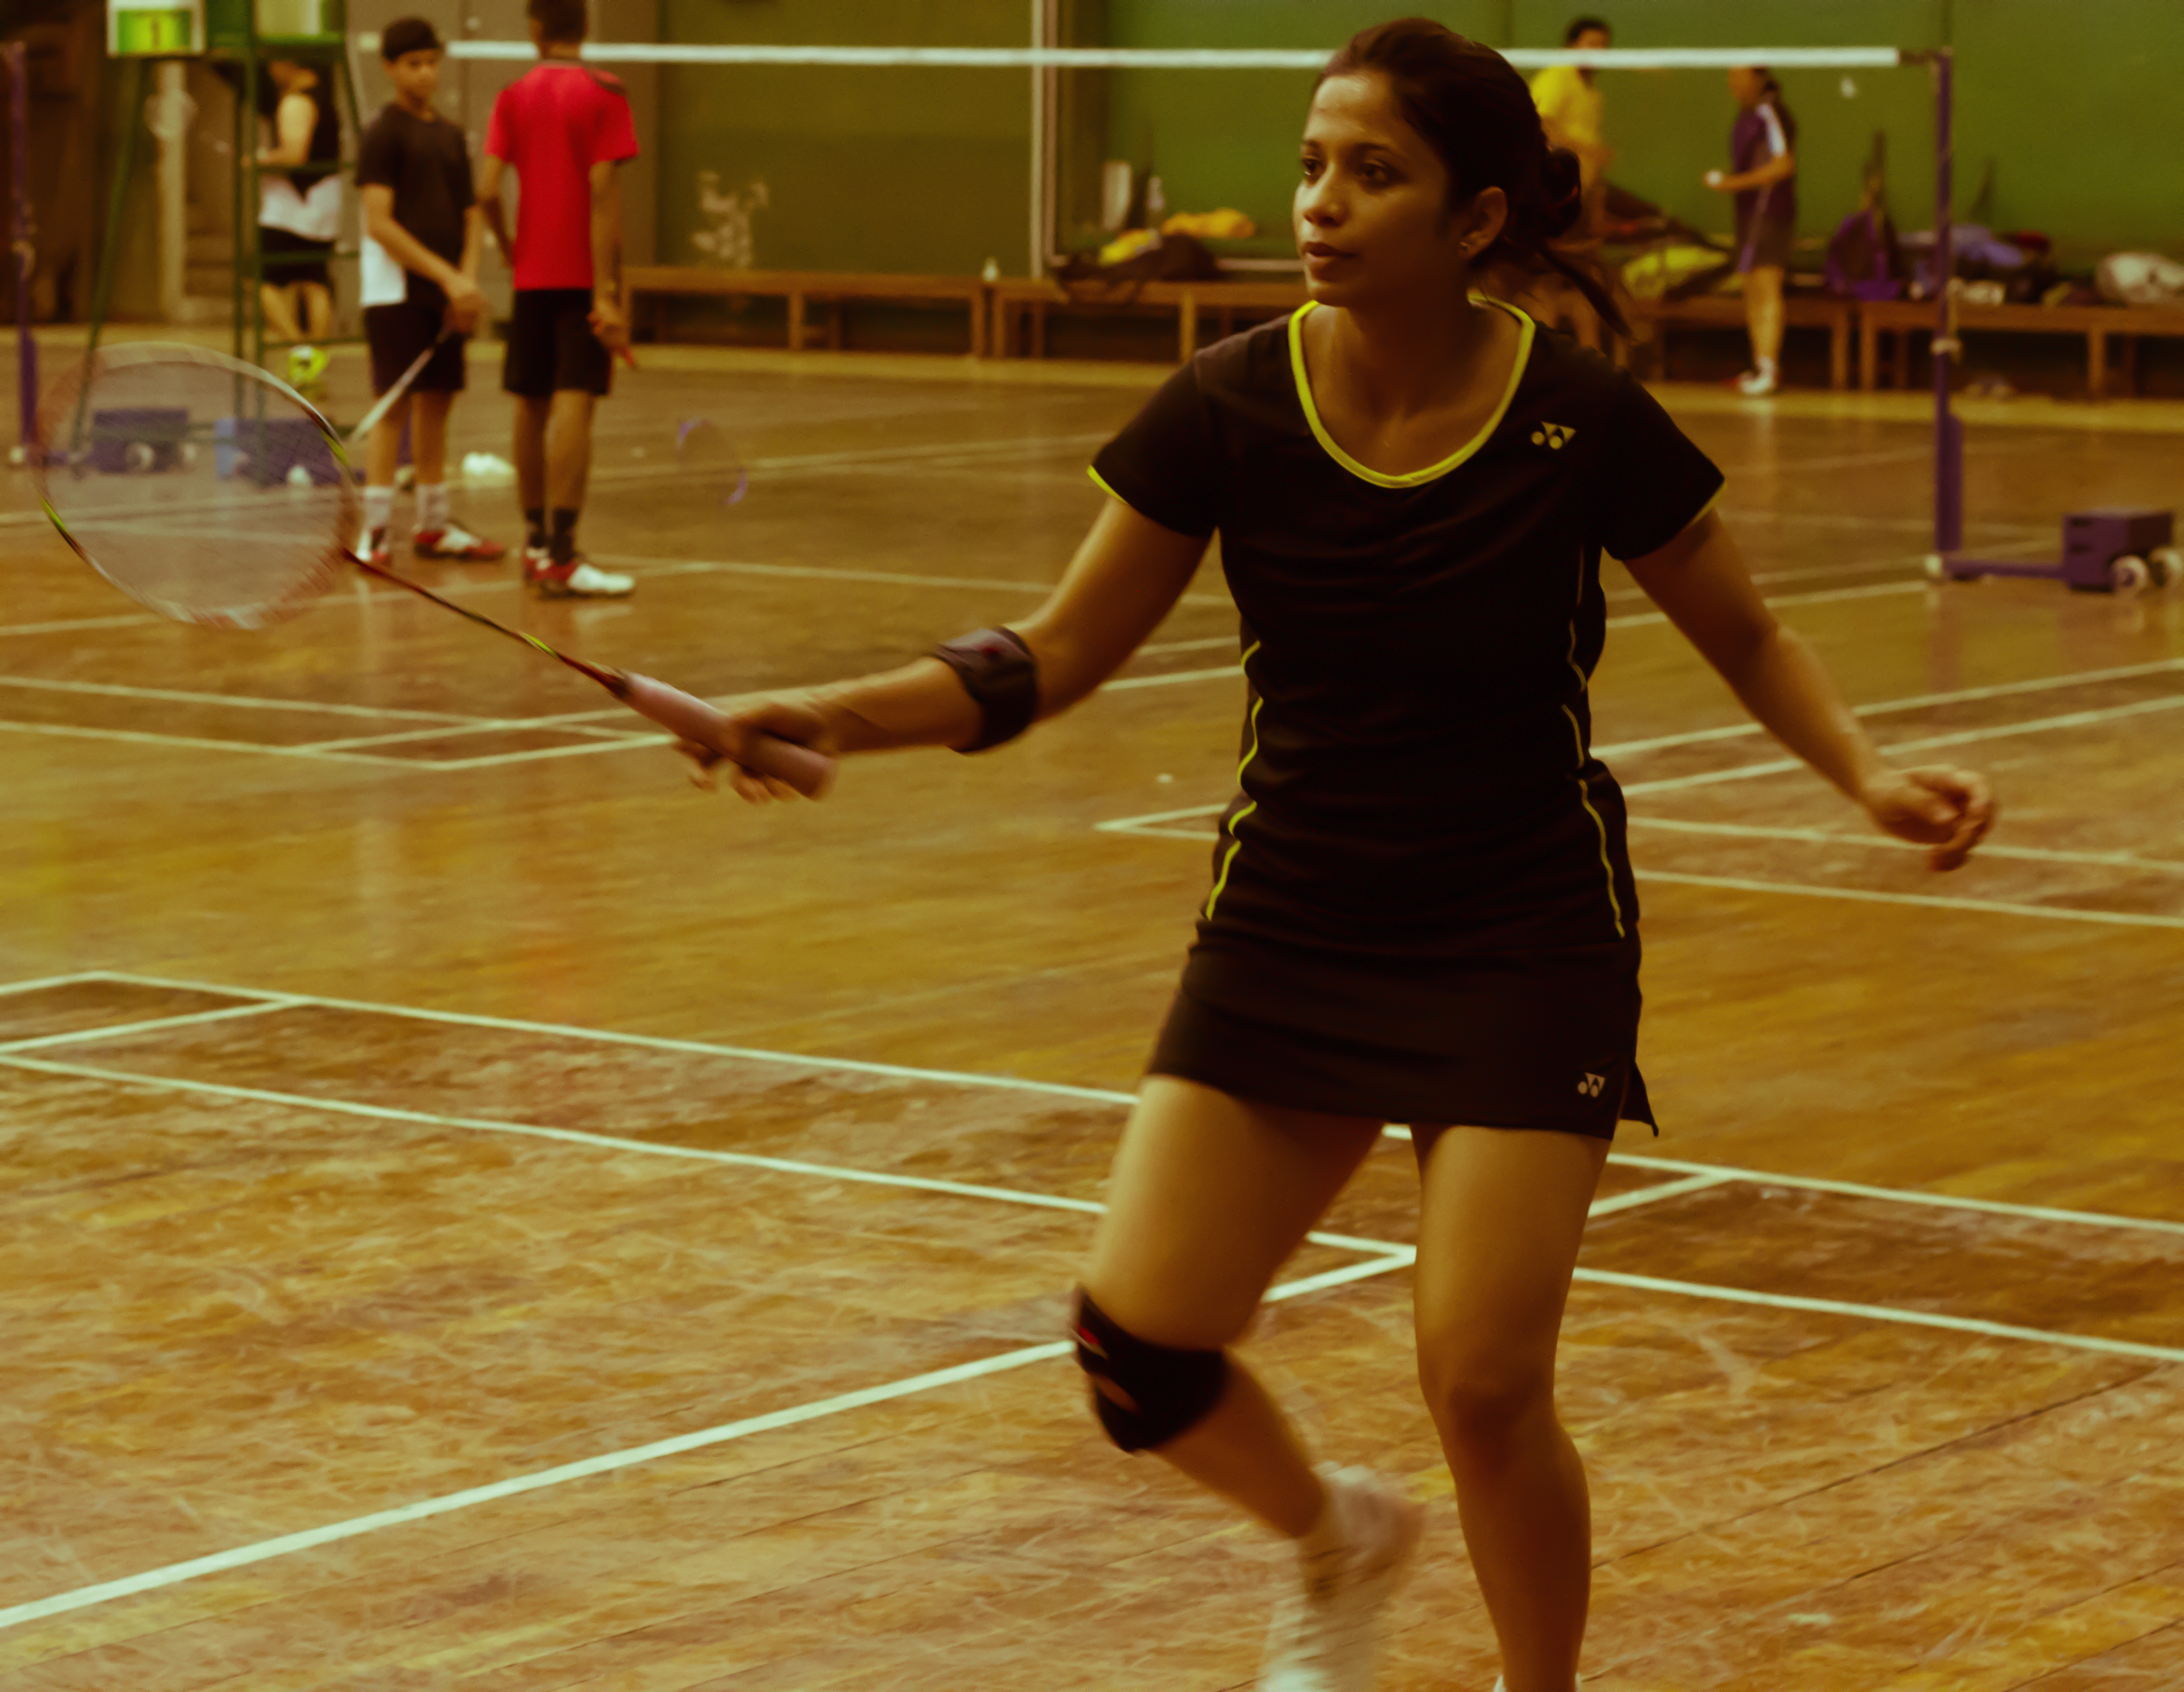 The theory of success and failure - Ex-national badminton champion Aditi Mutatkar decodes life and sports